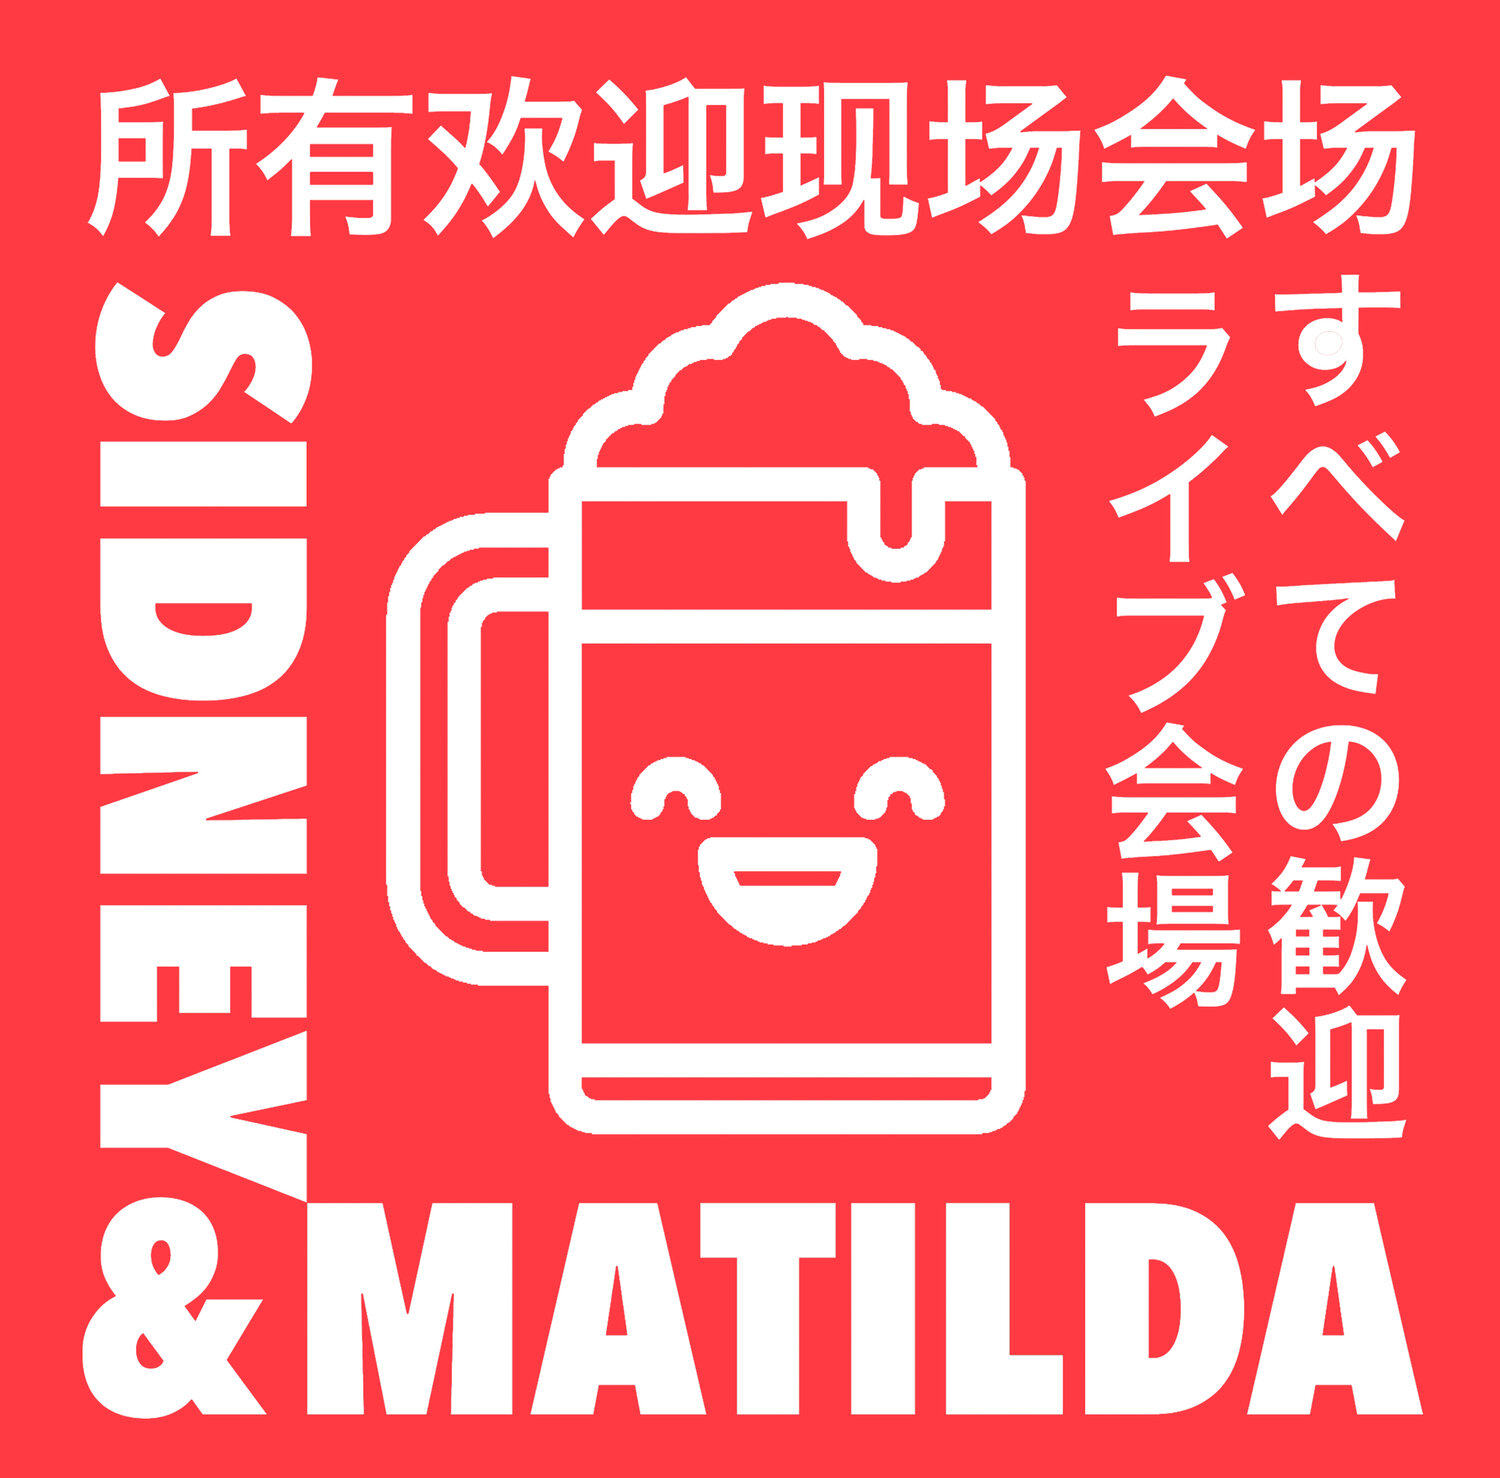 Sidney&amp;Matilda